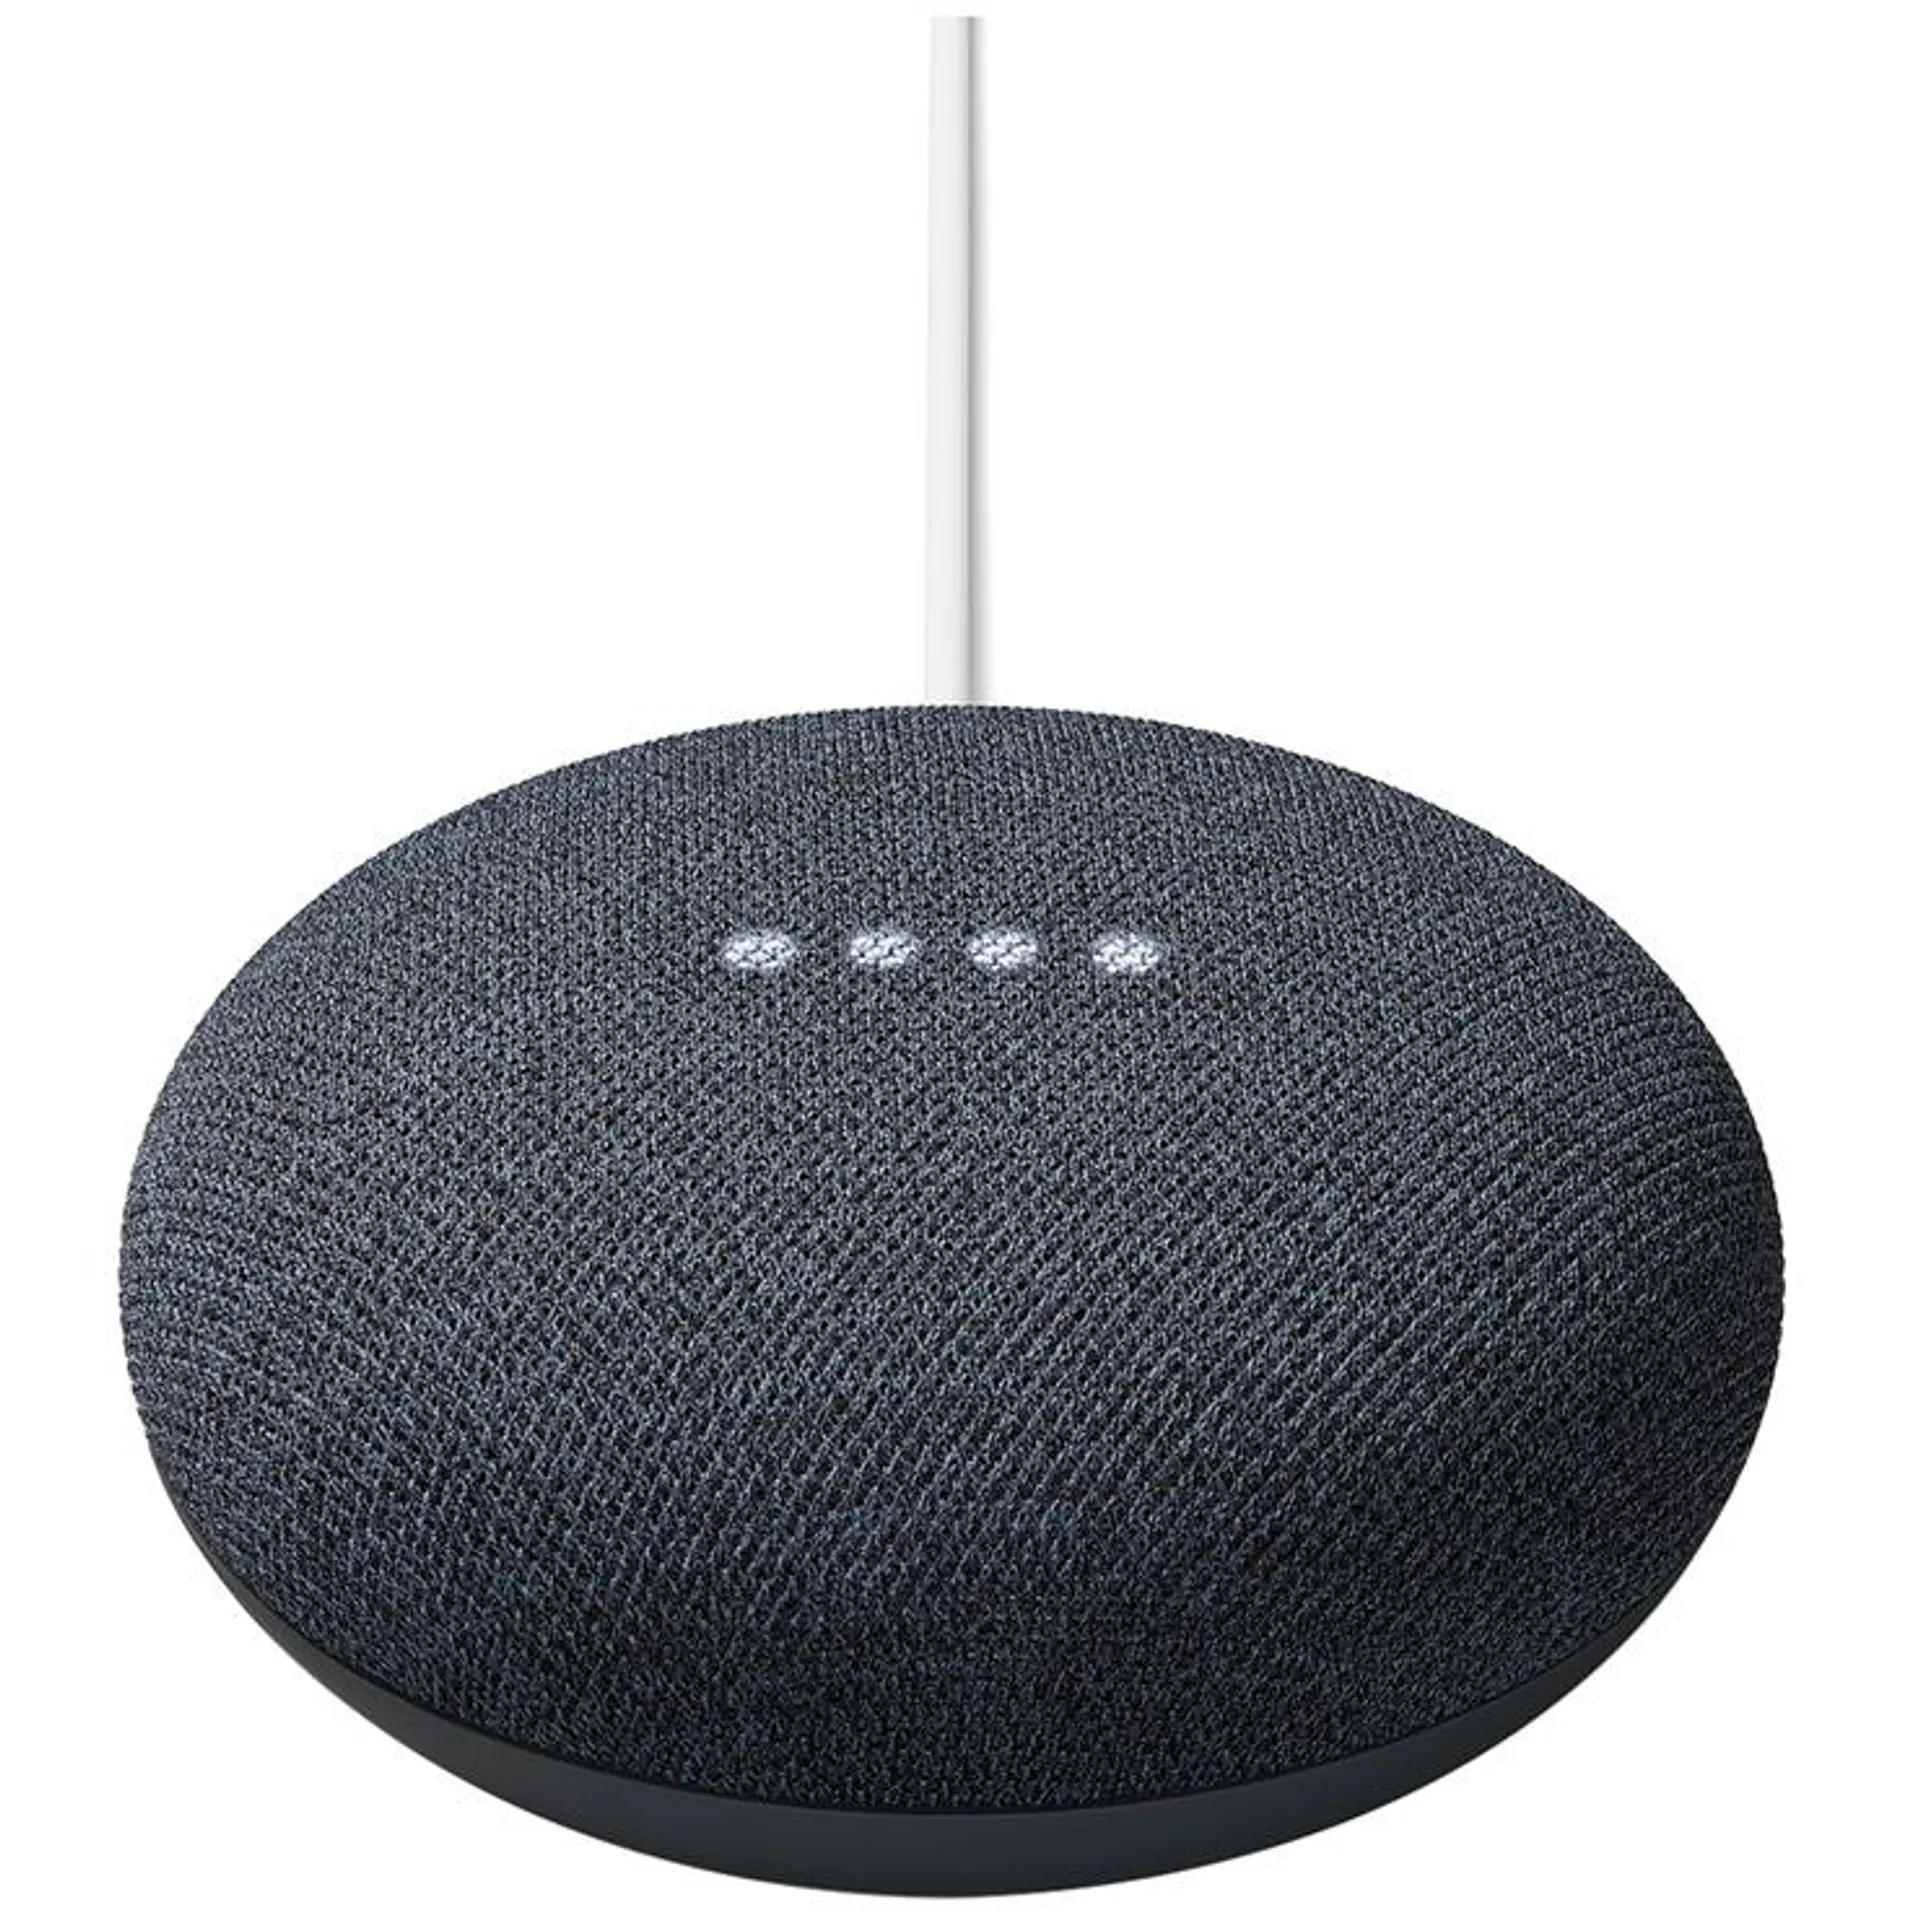 Google Assistant Nest Mini Charcoal GA00781-AU